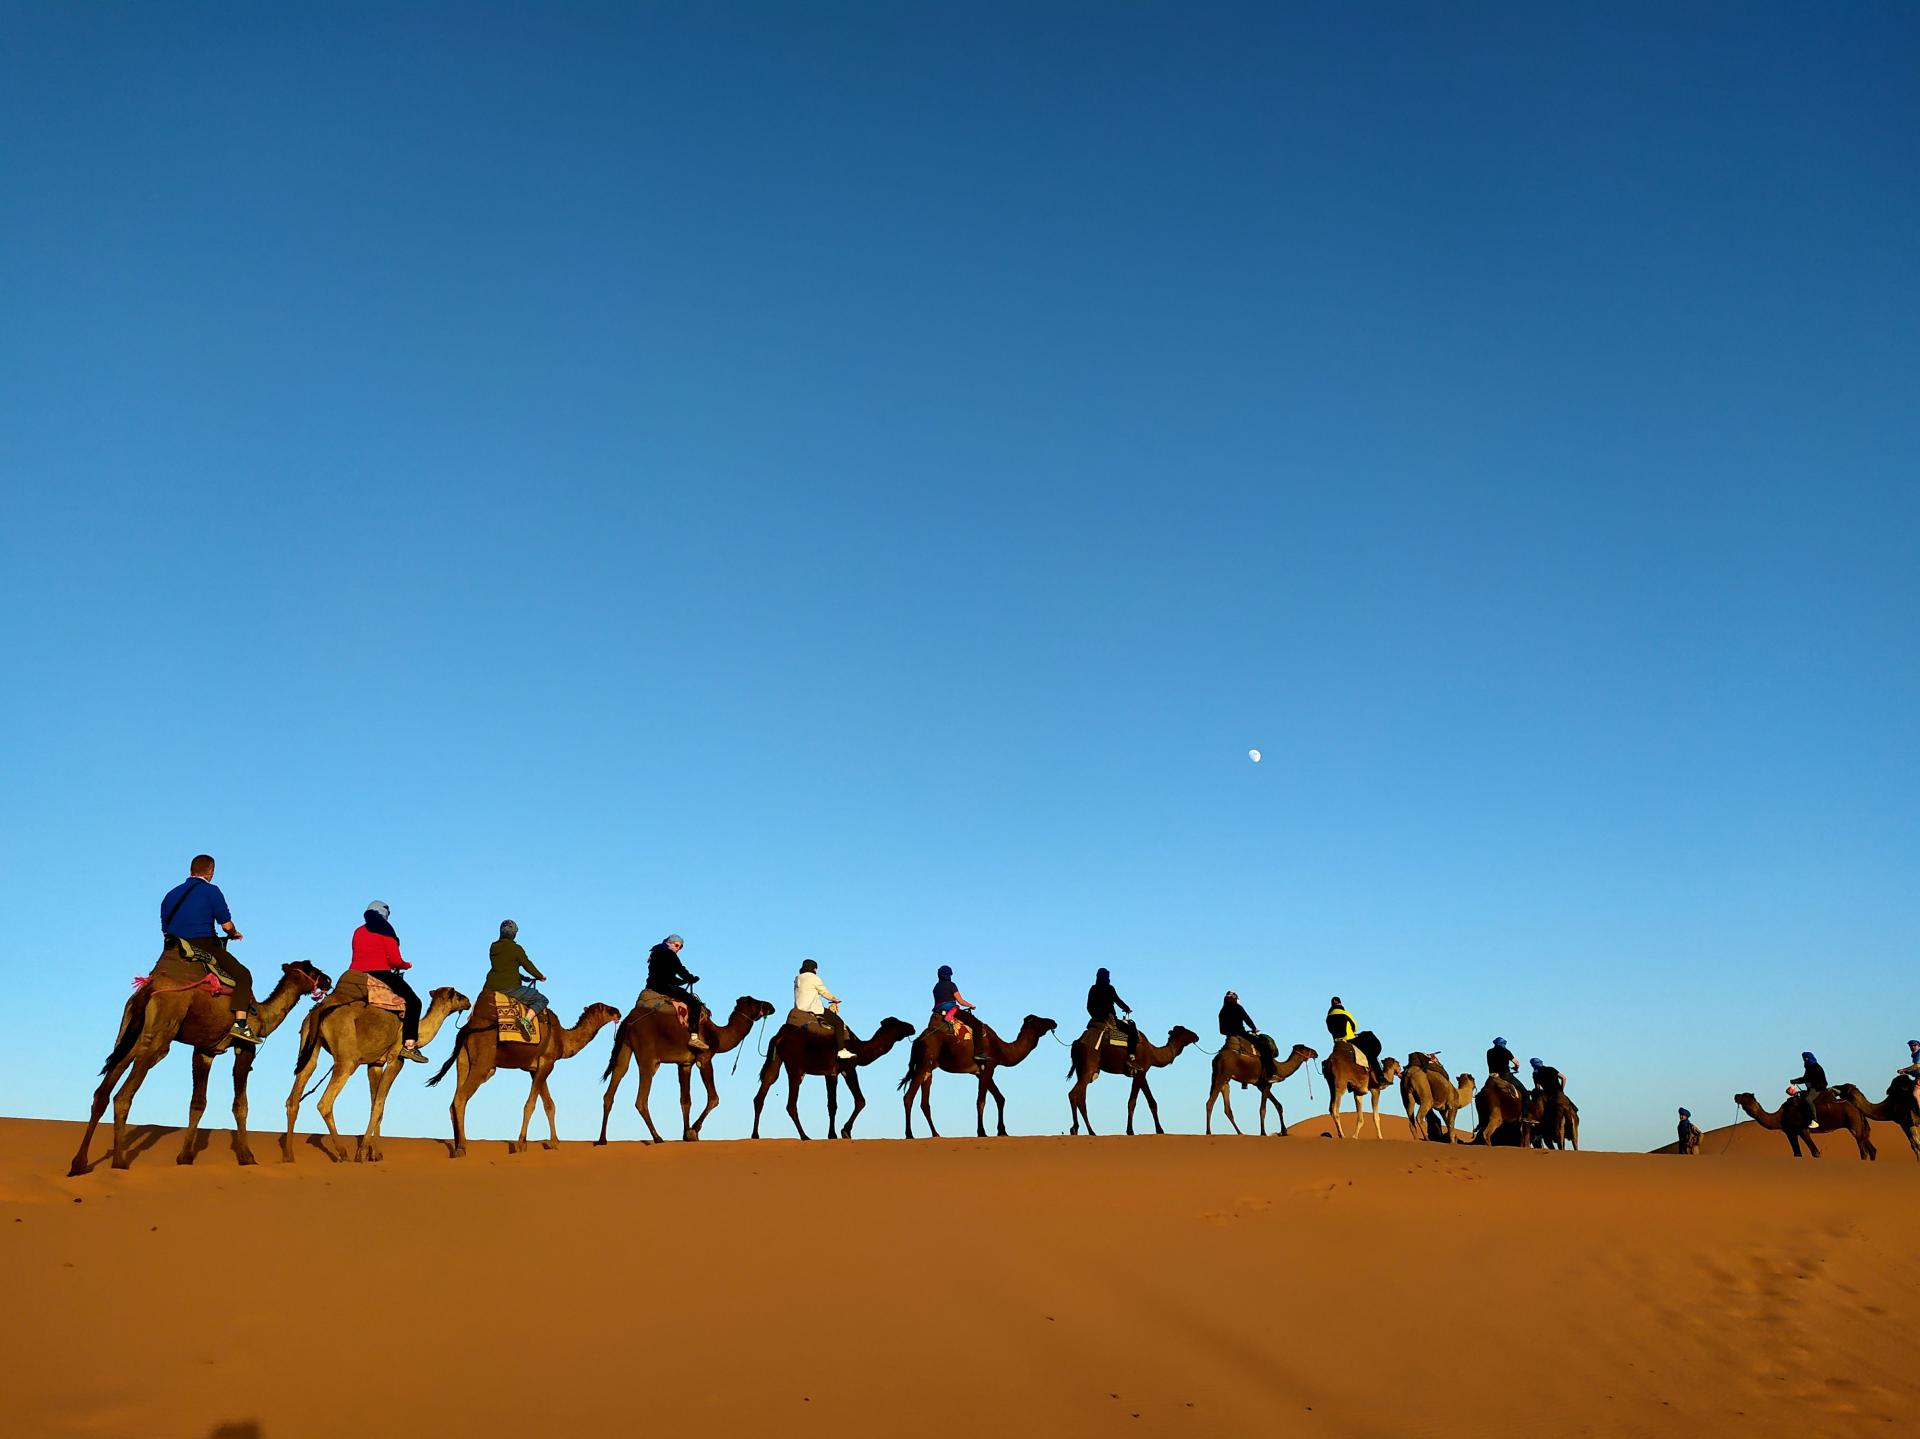 pustynia maroko